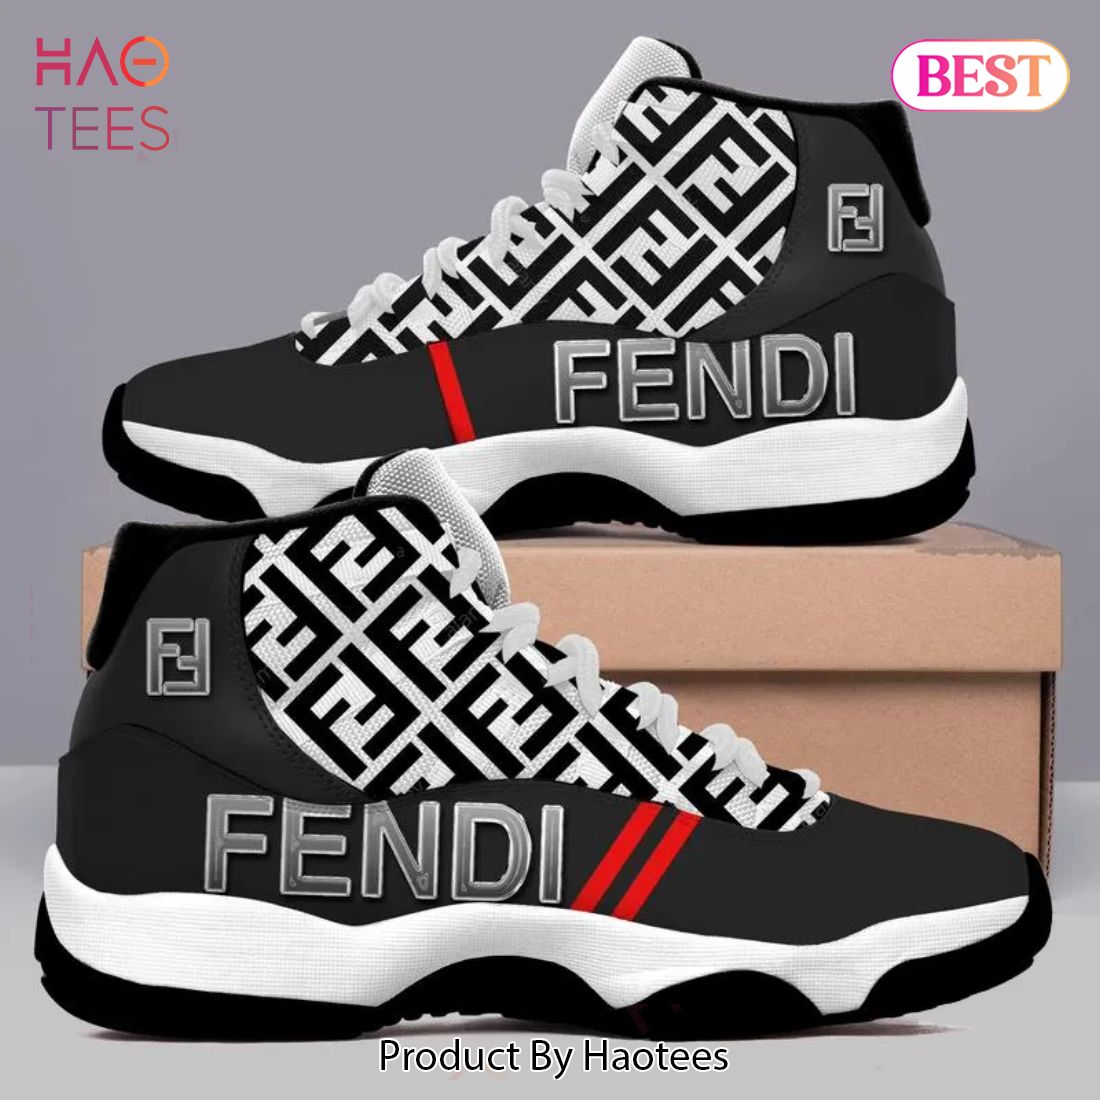 [NEW FASHION] Fendi Red Line Air Jordan 11 Sneakers Shoes Hot 2023 Gifts For Men Women